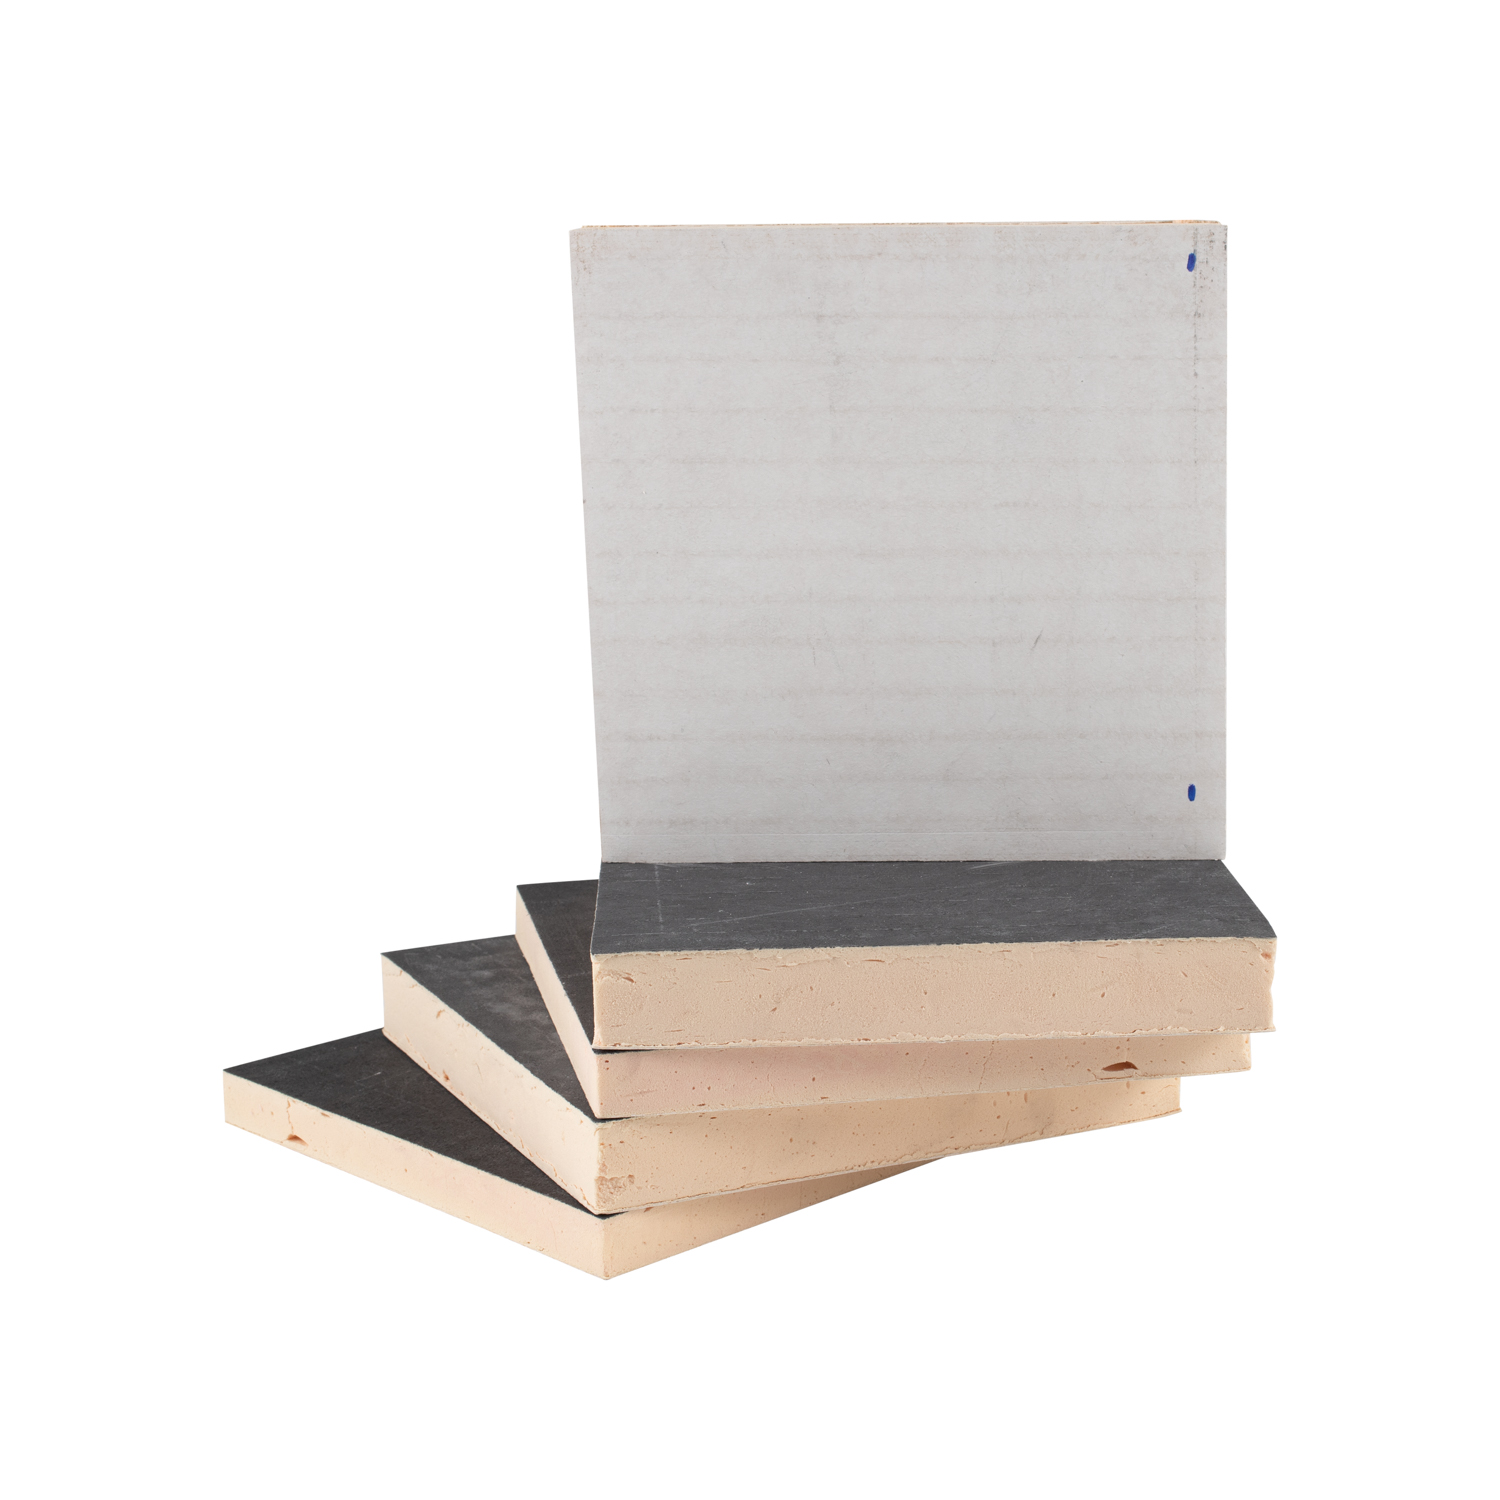 Fiberglass With Cement Coating Phenolic Insulation Board